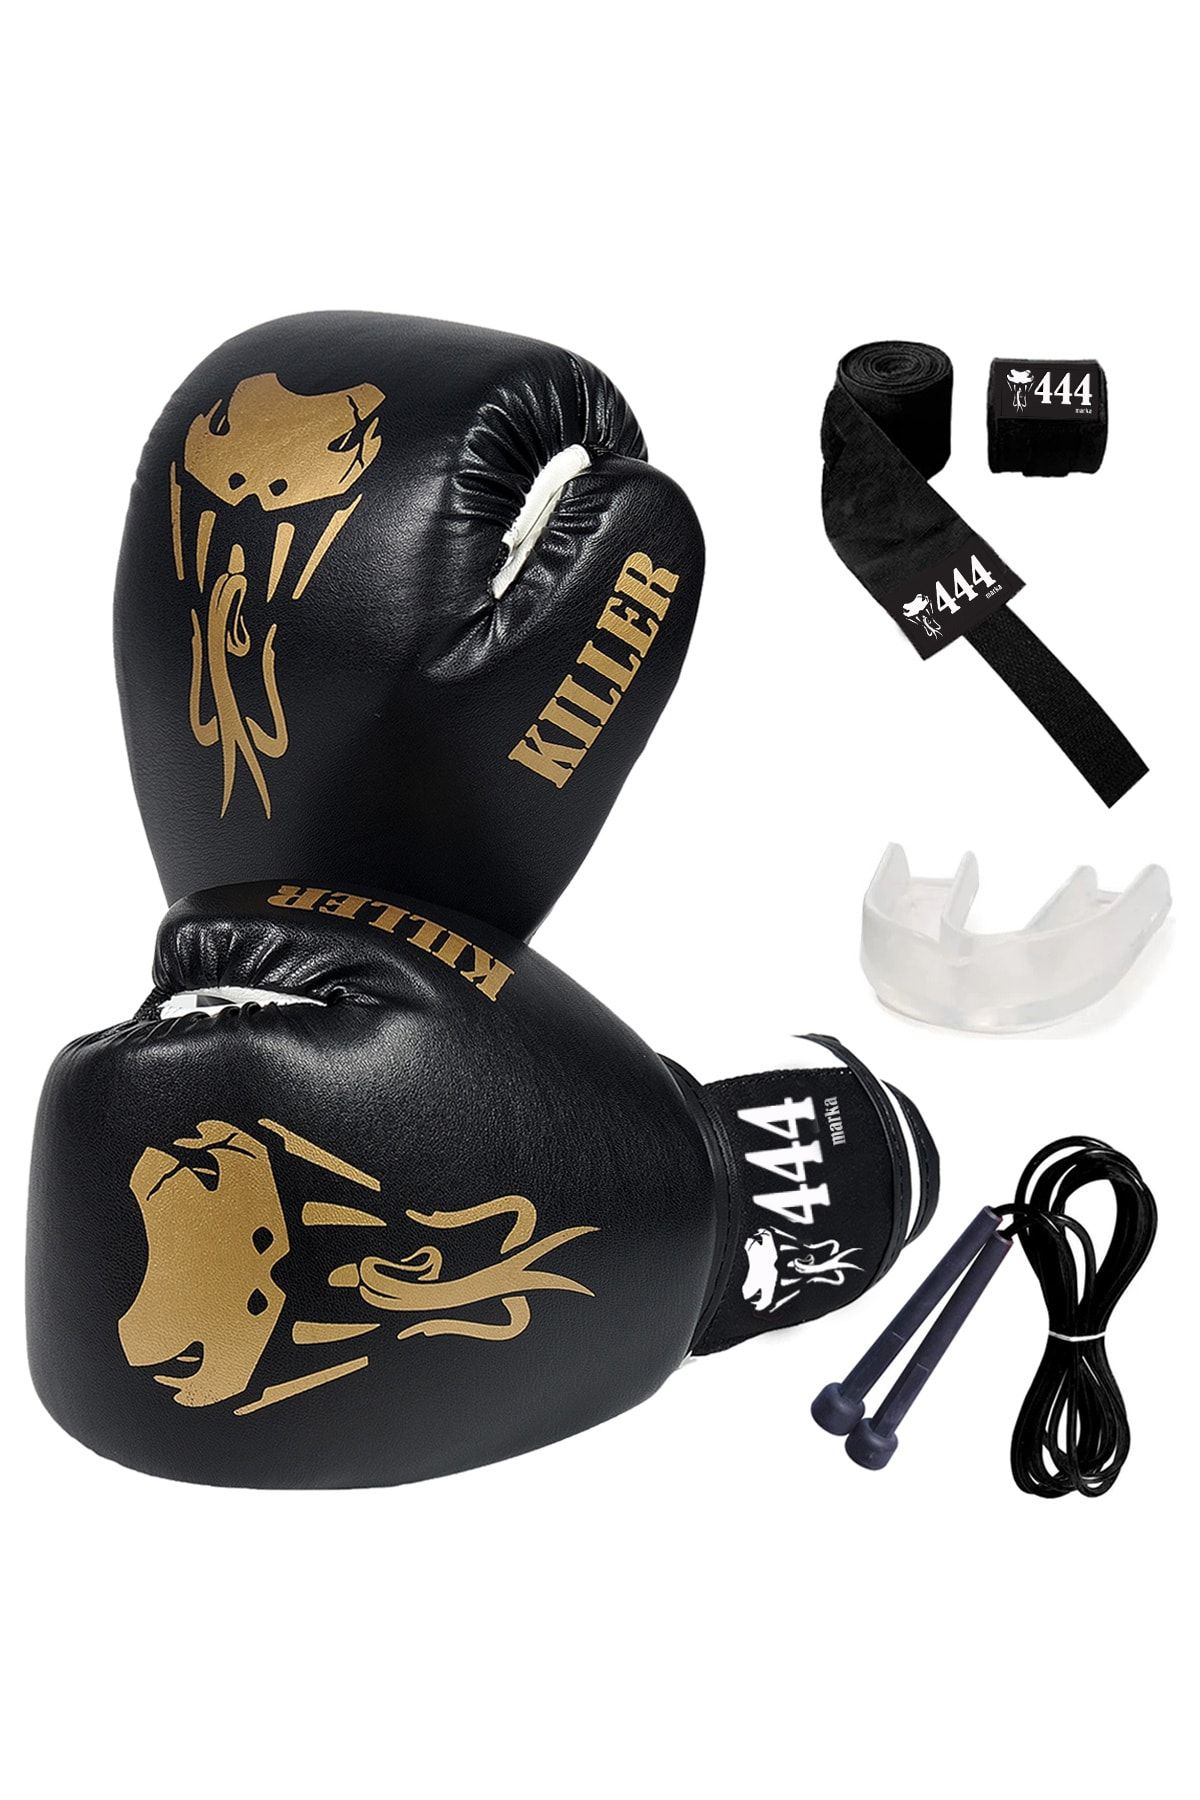 AydBoss Kıller Boks Eldiveni Seti Boxing Gloves Boks Bandajı Boks Dişliği Atlama Ipi Kick Boks Eldiveni